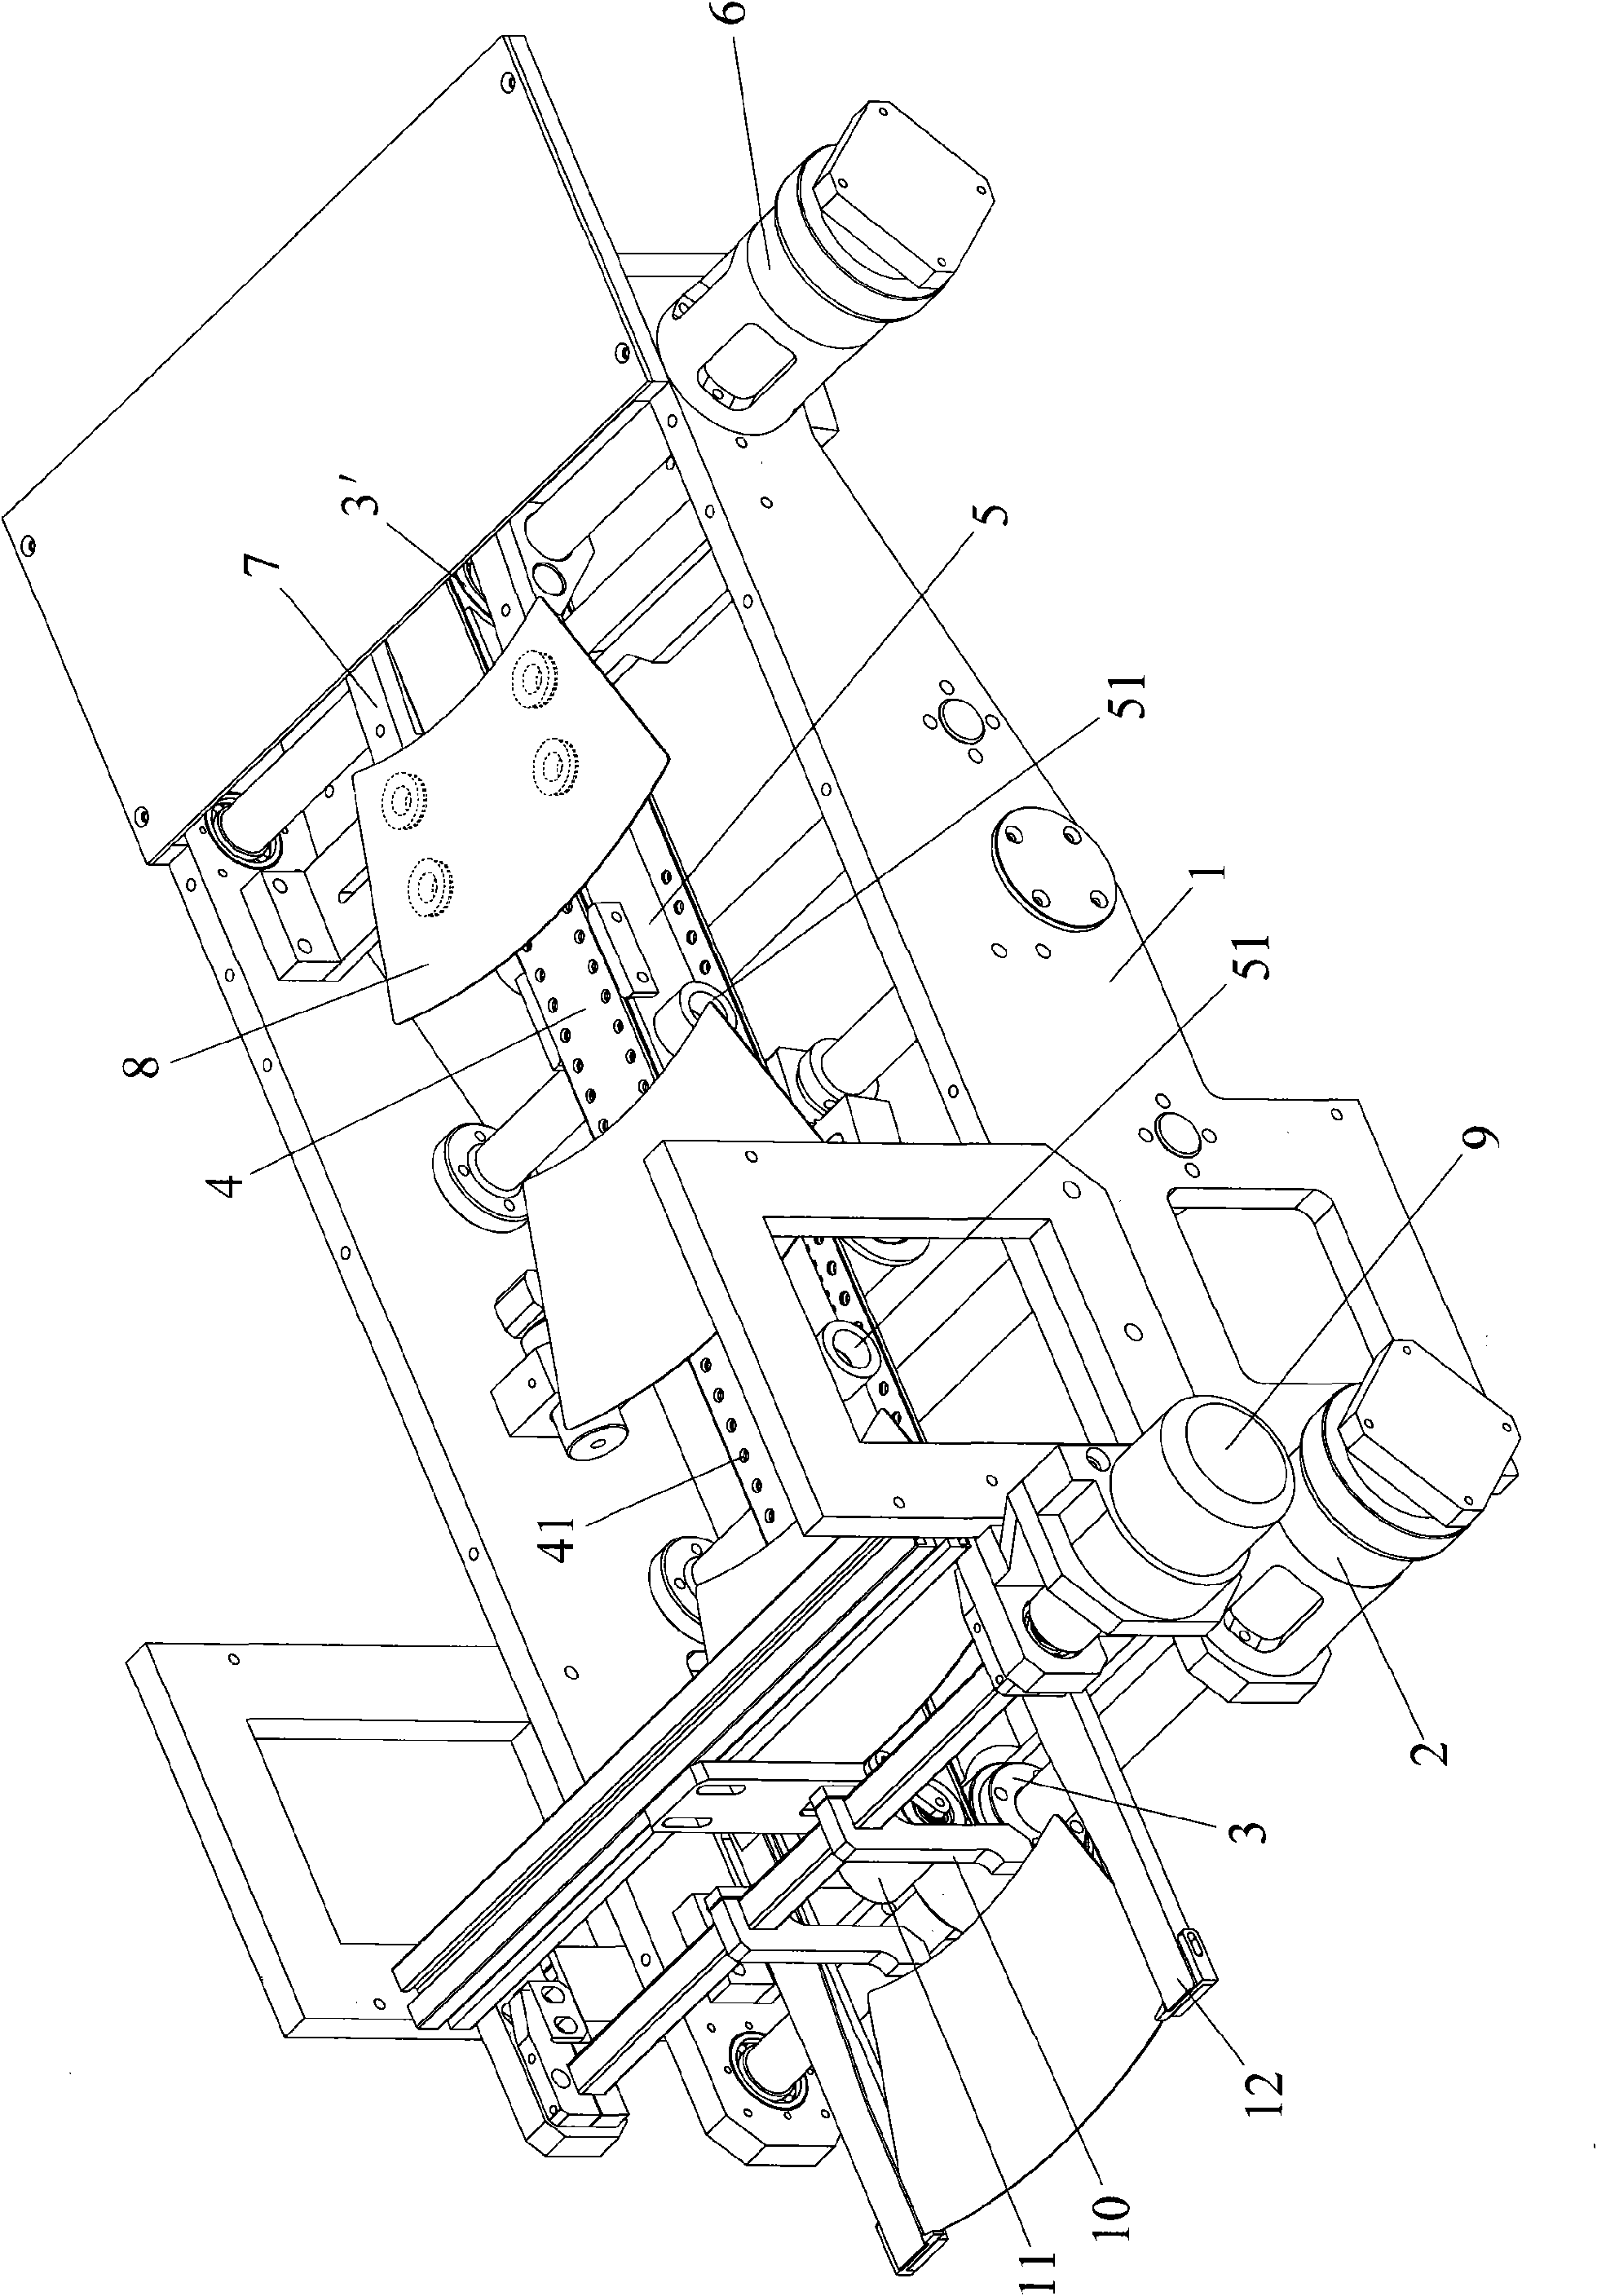 Paper feeding mechanism of paper vessel molding machine